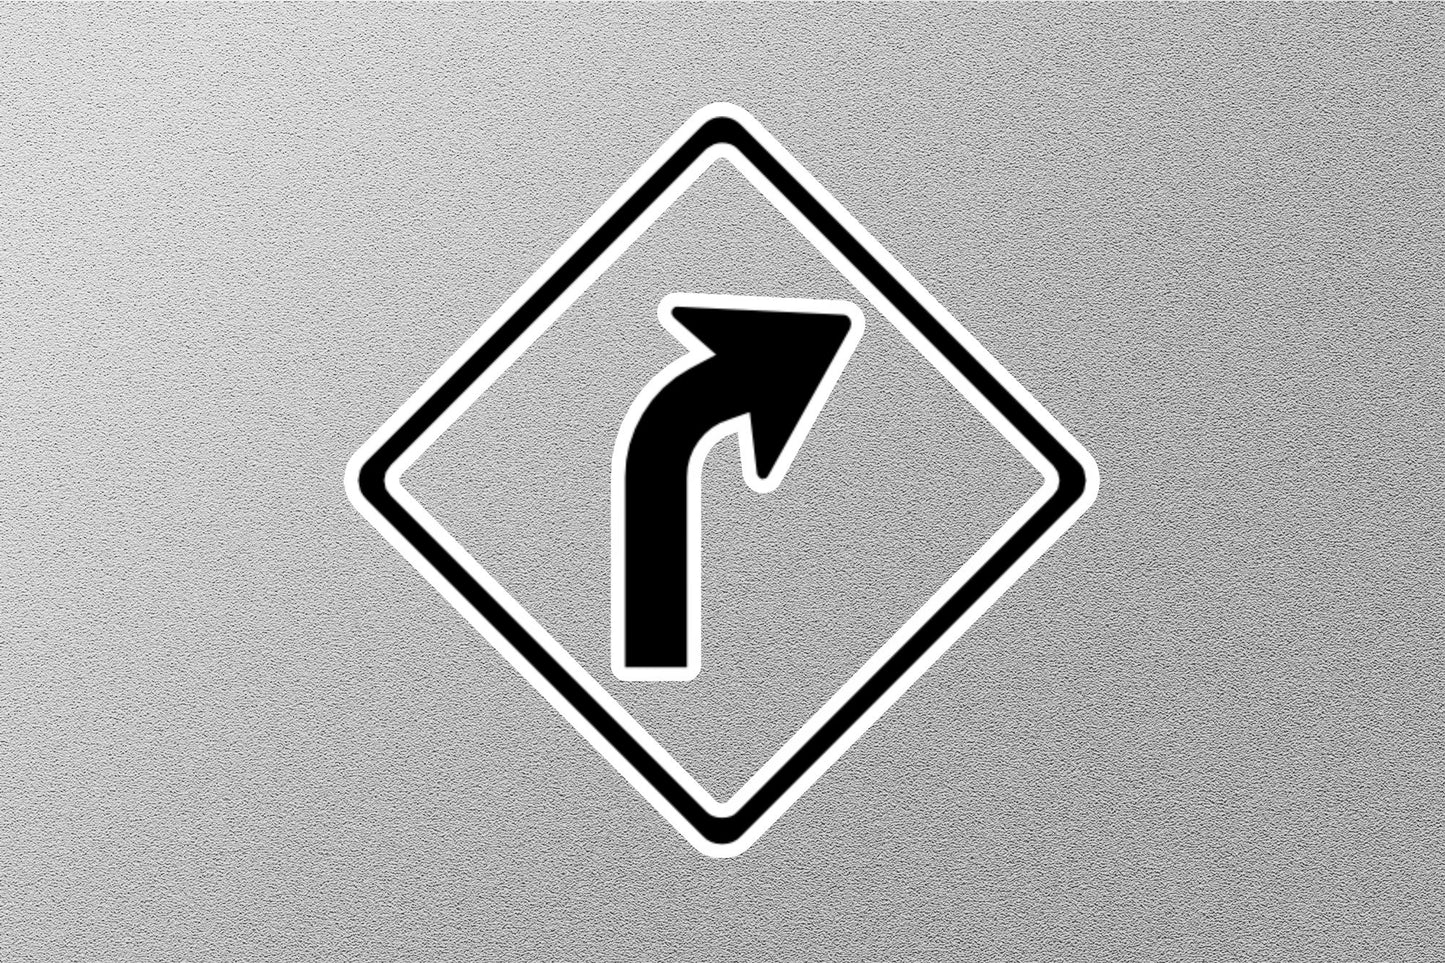 Right Turn Ahead Warning Sign Sticker